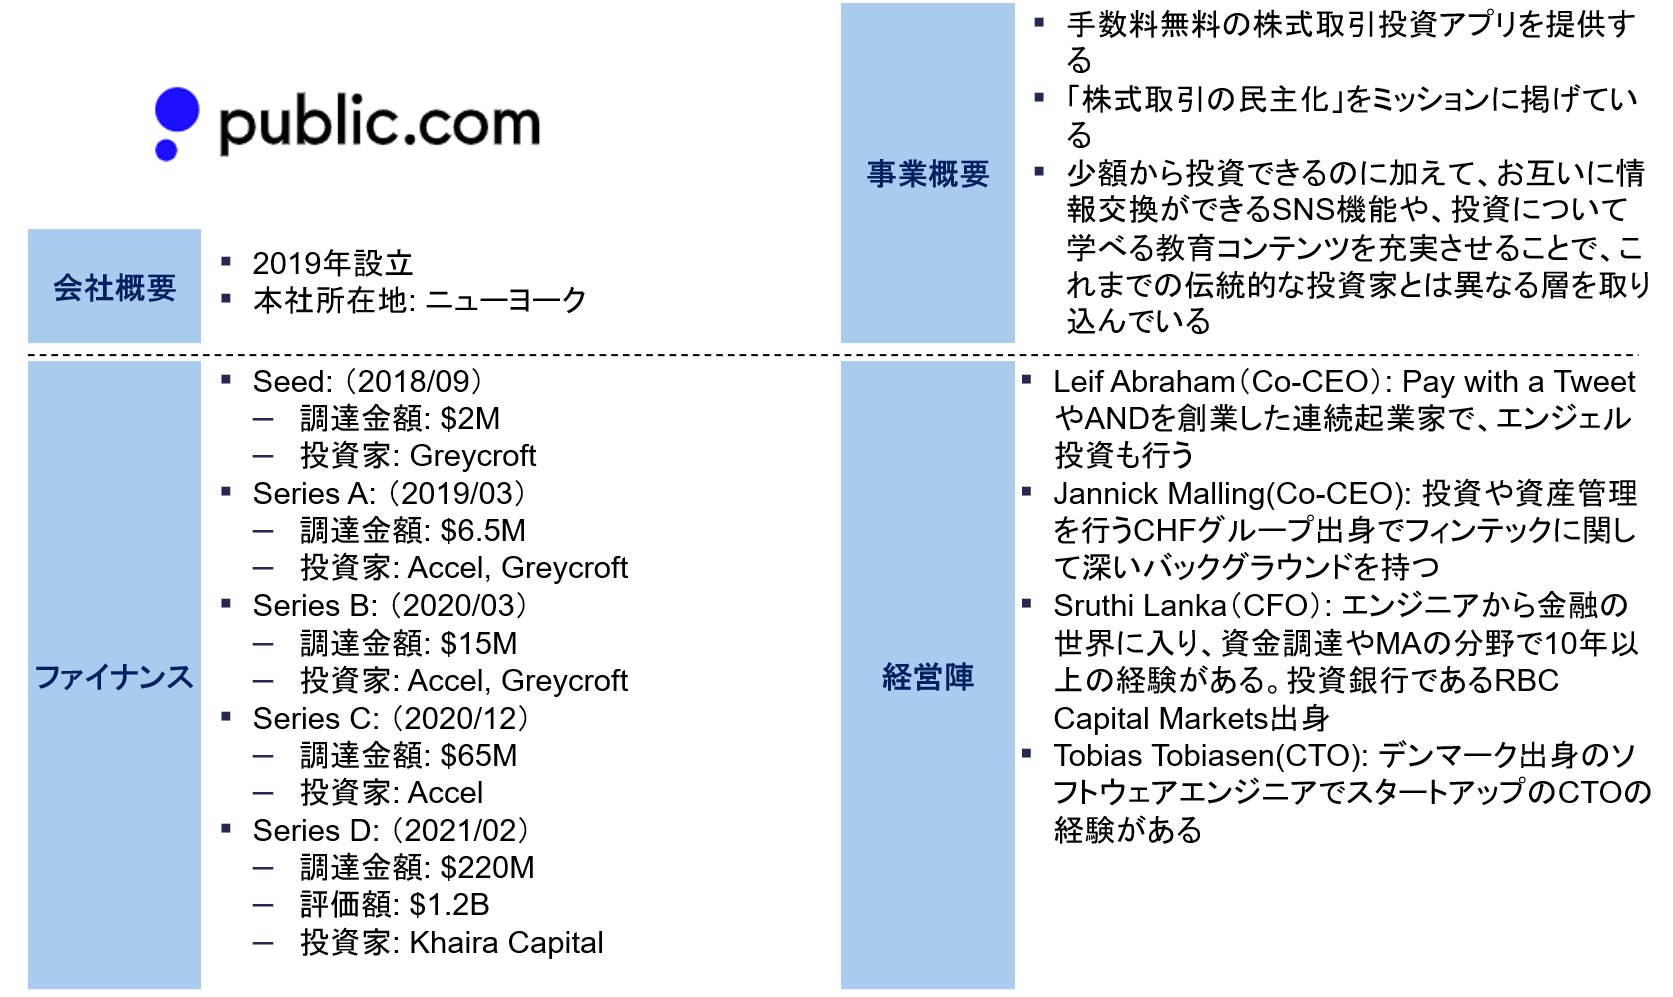 public.com概要